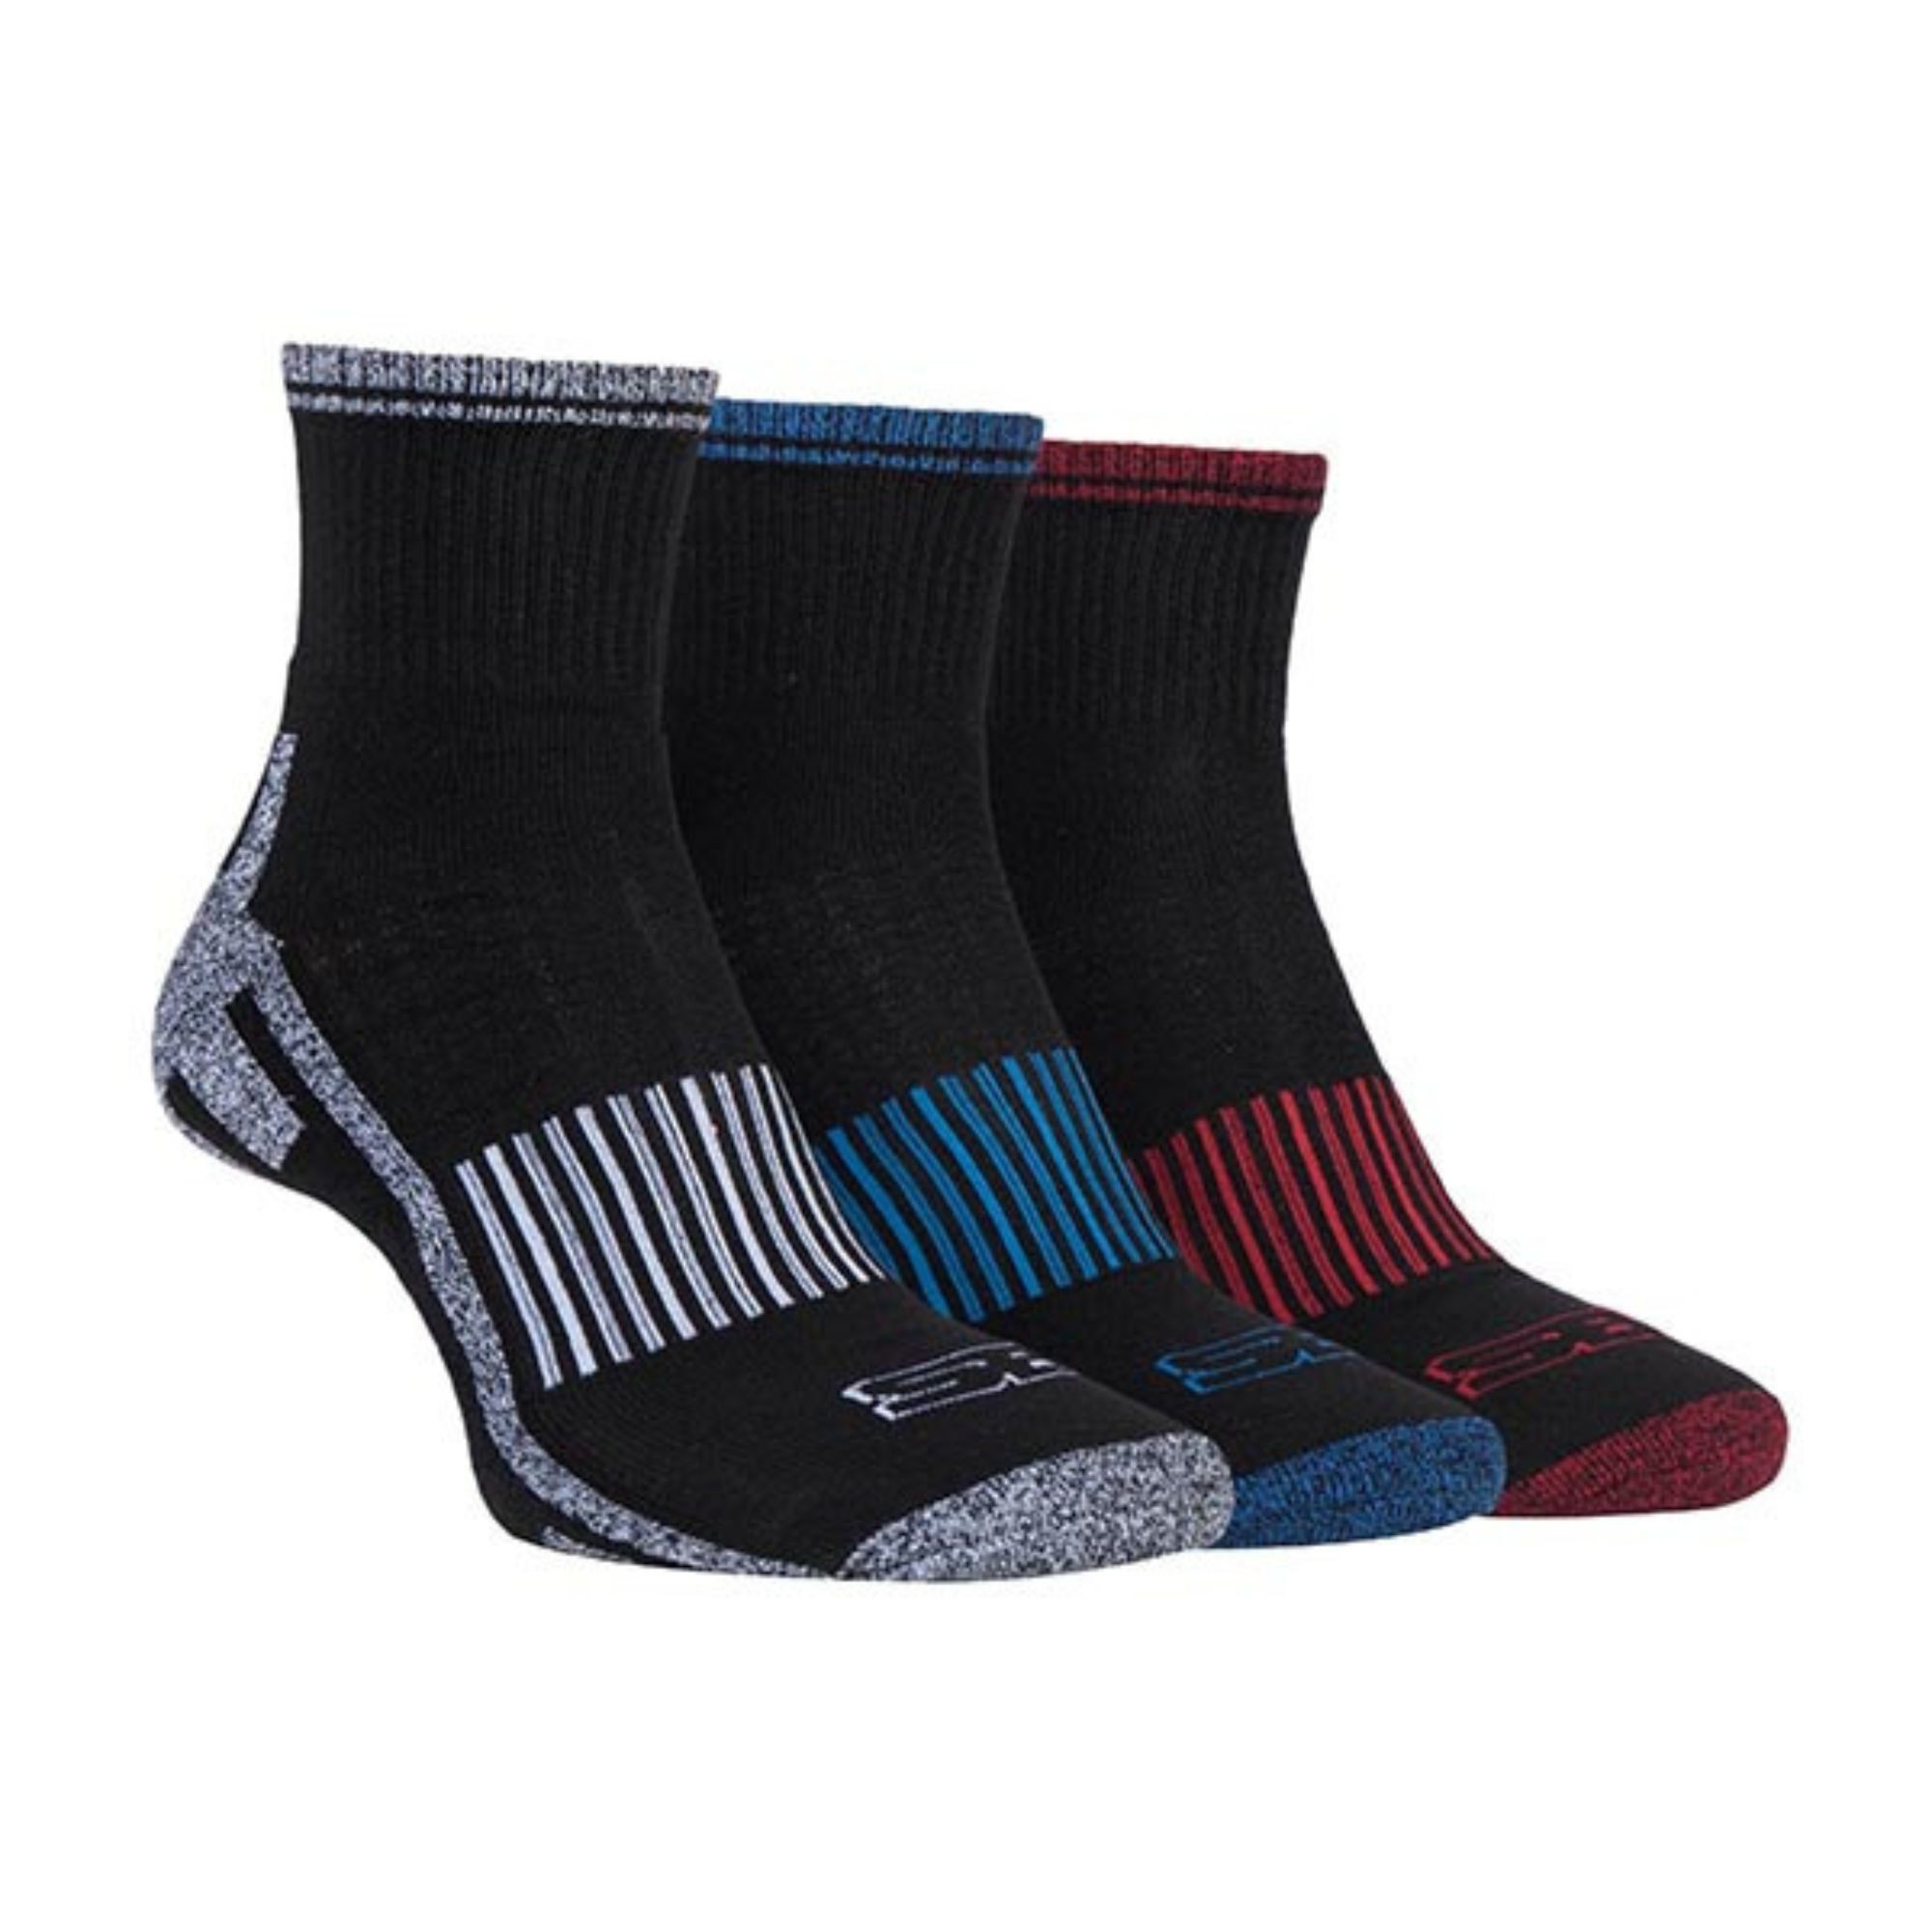 3 Pairs Low Cut Mens Sport Ankle Socks by Storm Bloc